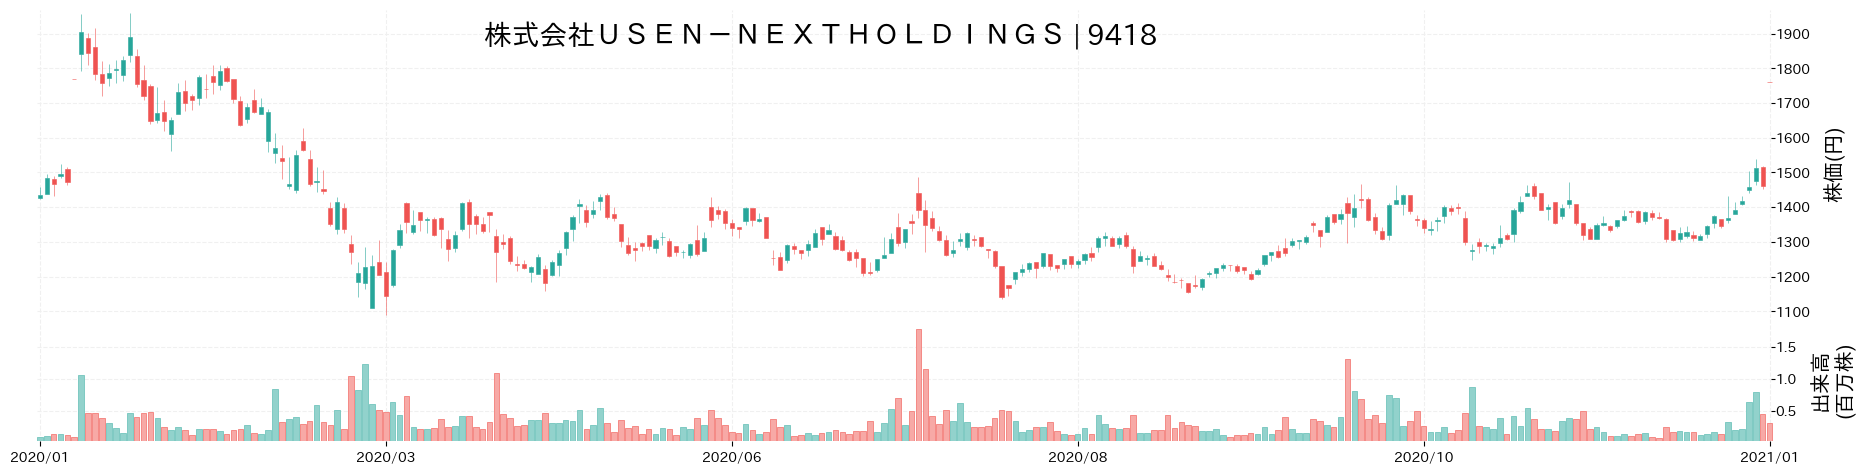 USEN-NEXT HOLDINGS の株価推移(2020)